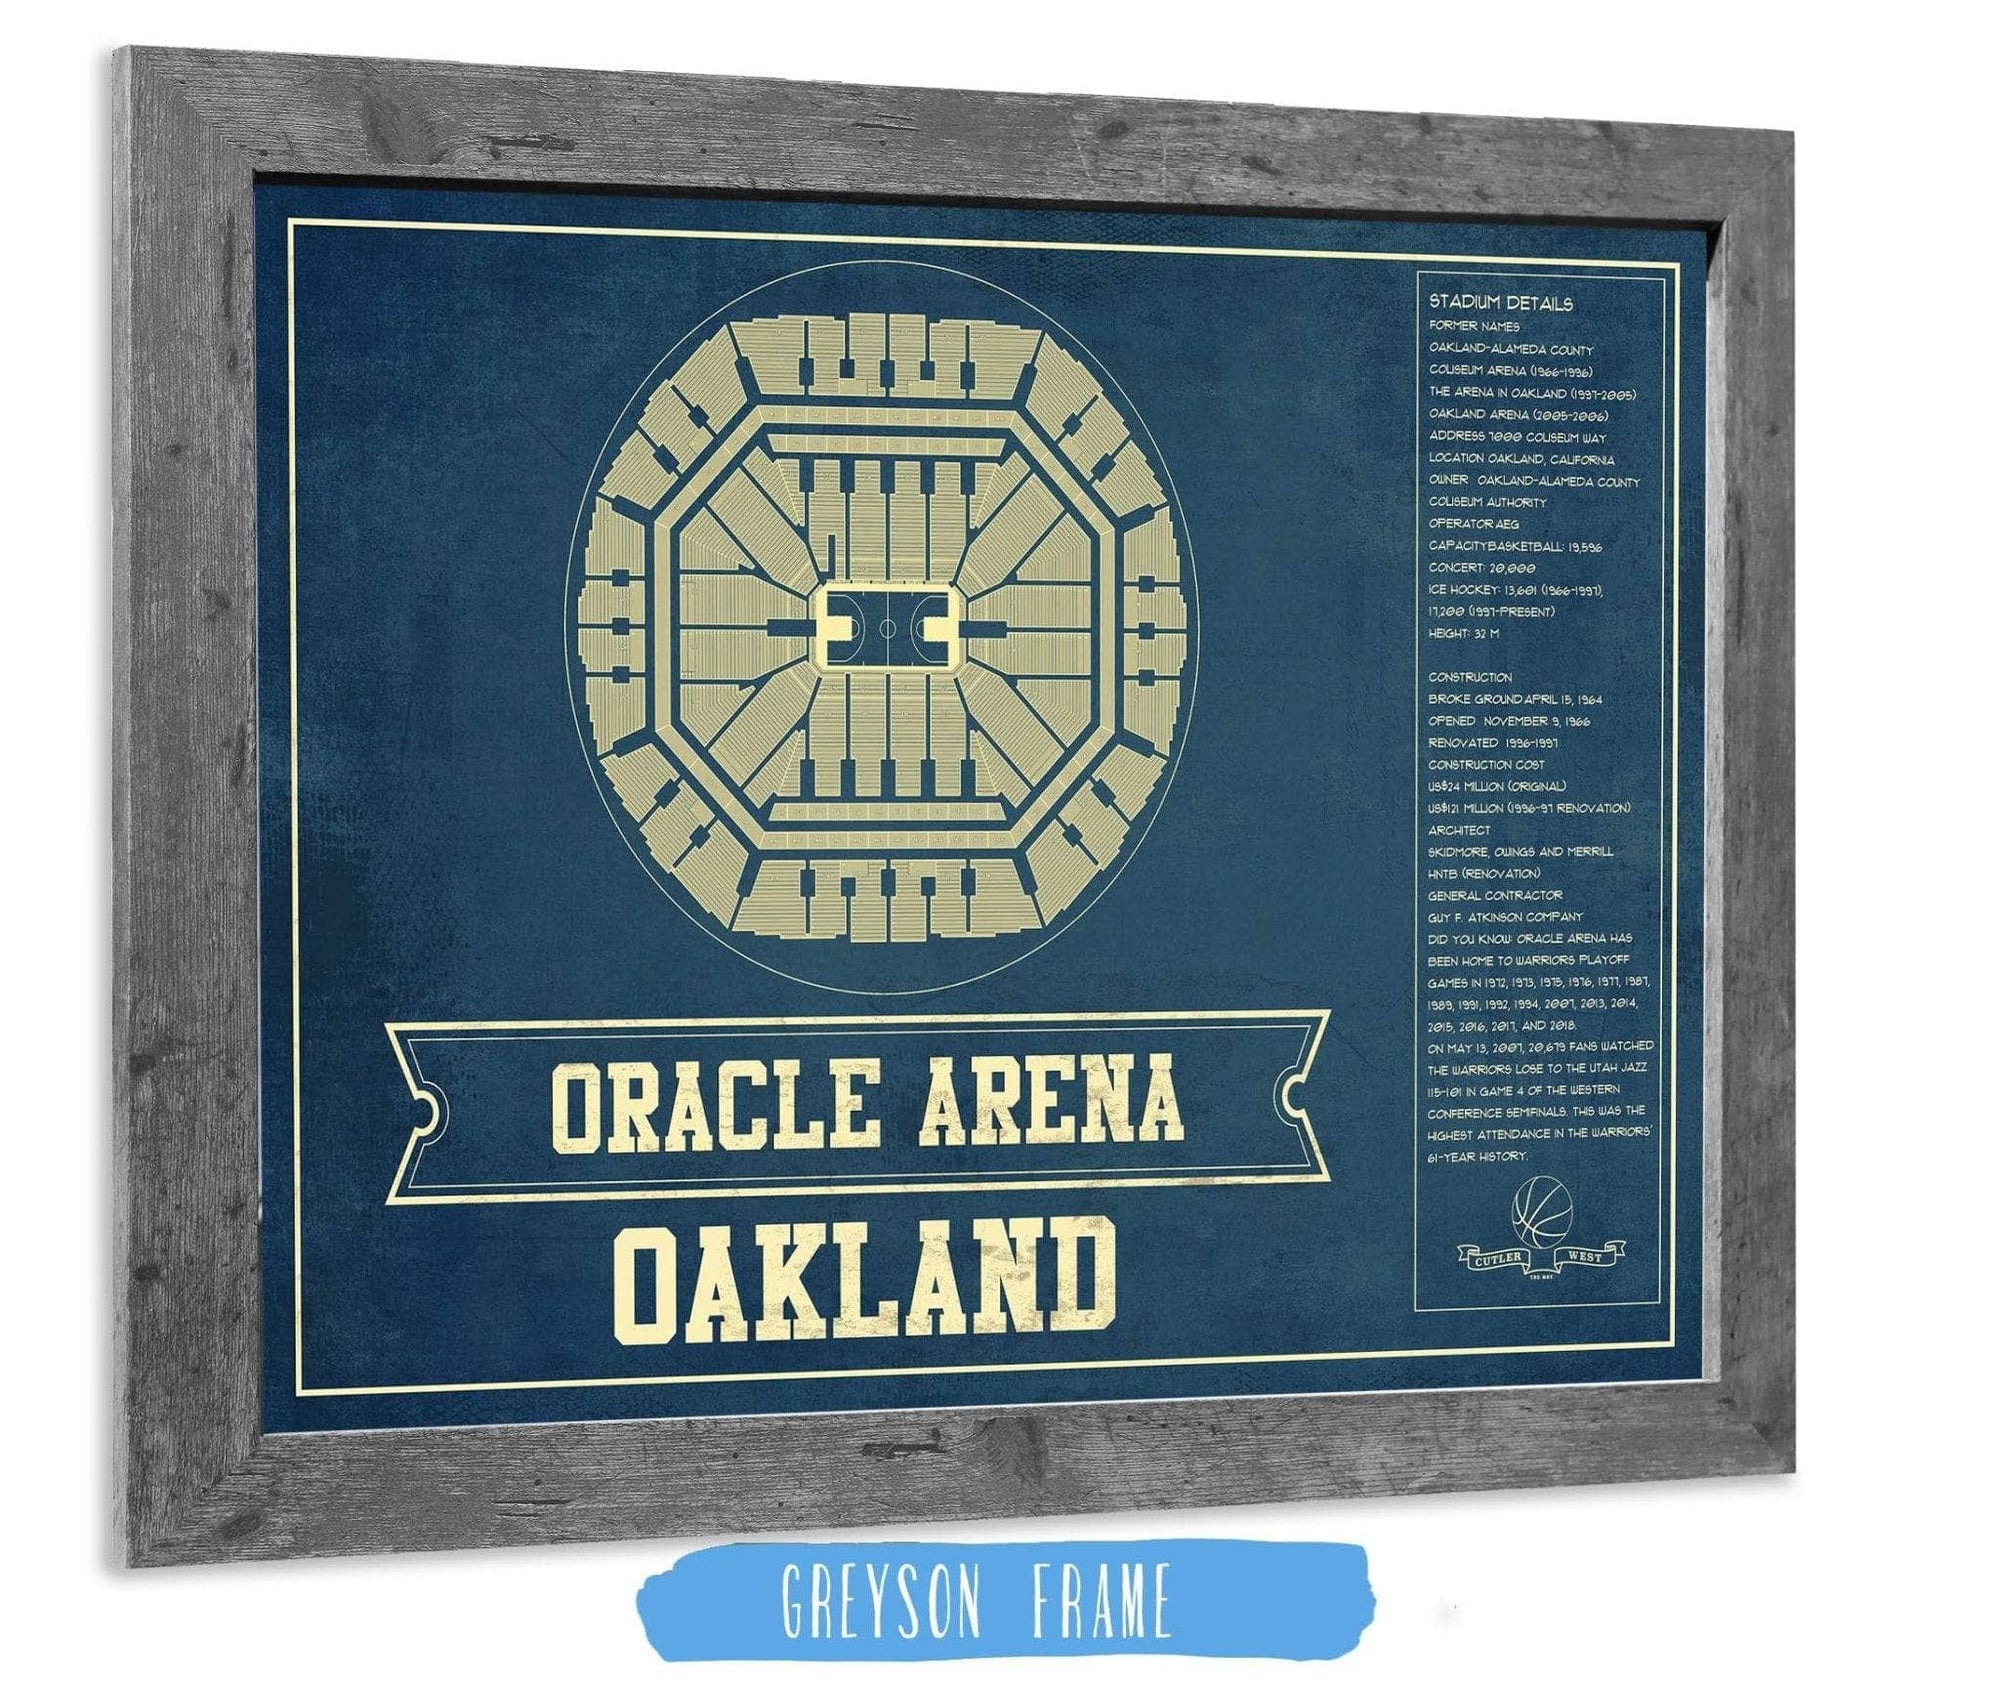 Cutler West Basketball Collection 14" x 11" / Greyson Frame Golden State Warriors - Oracle Arena Vintage Basketball Blueprint Framed NBA Print 660987526_76438